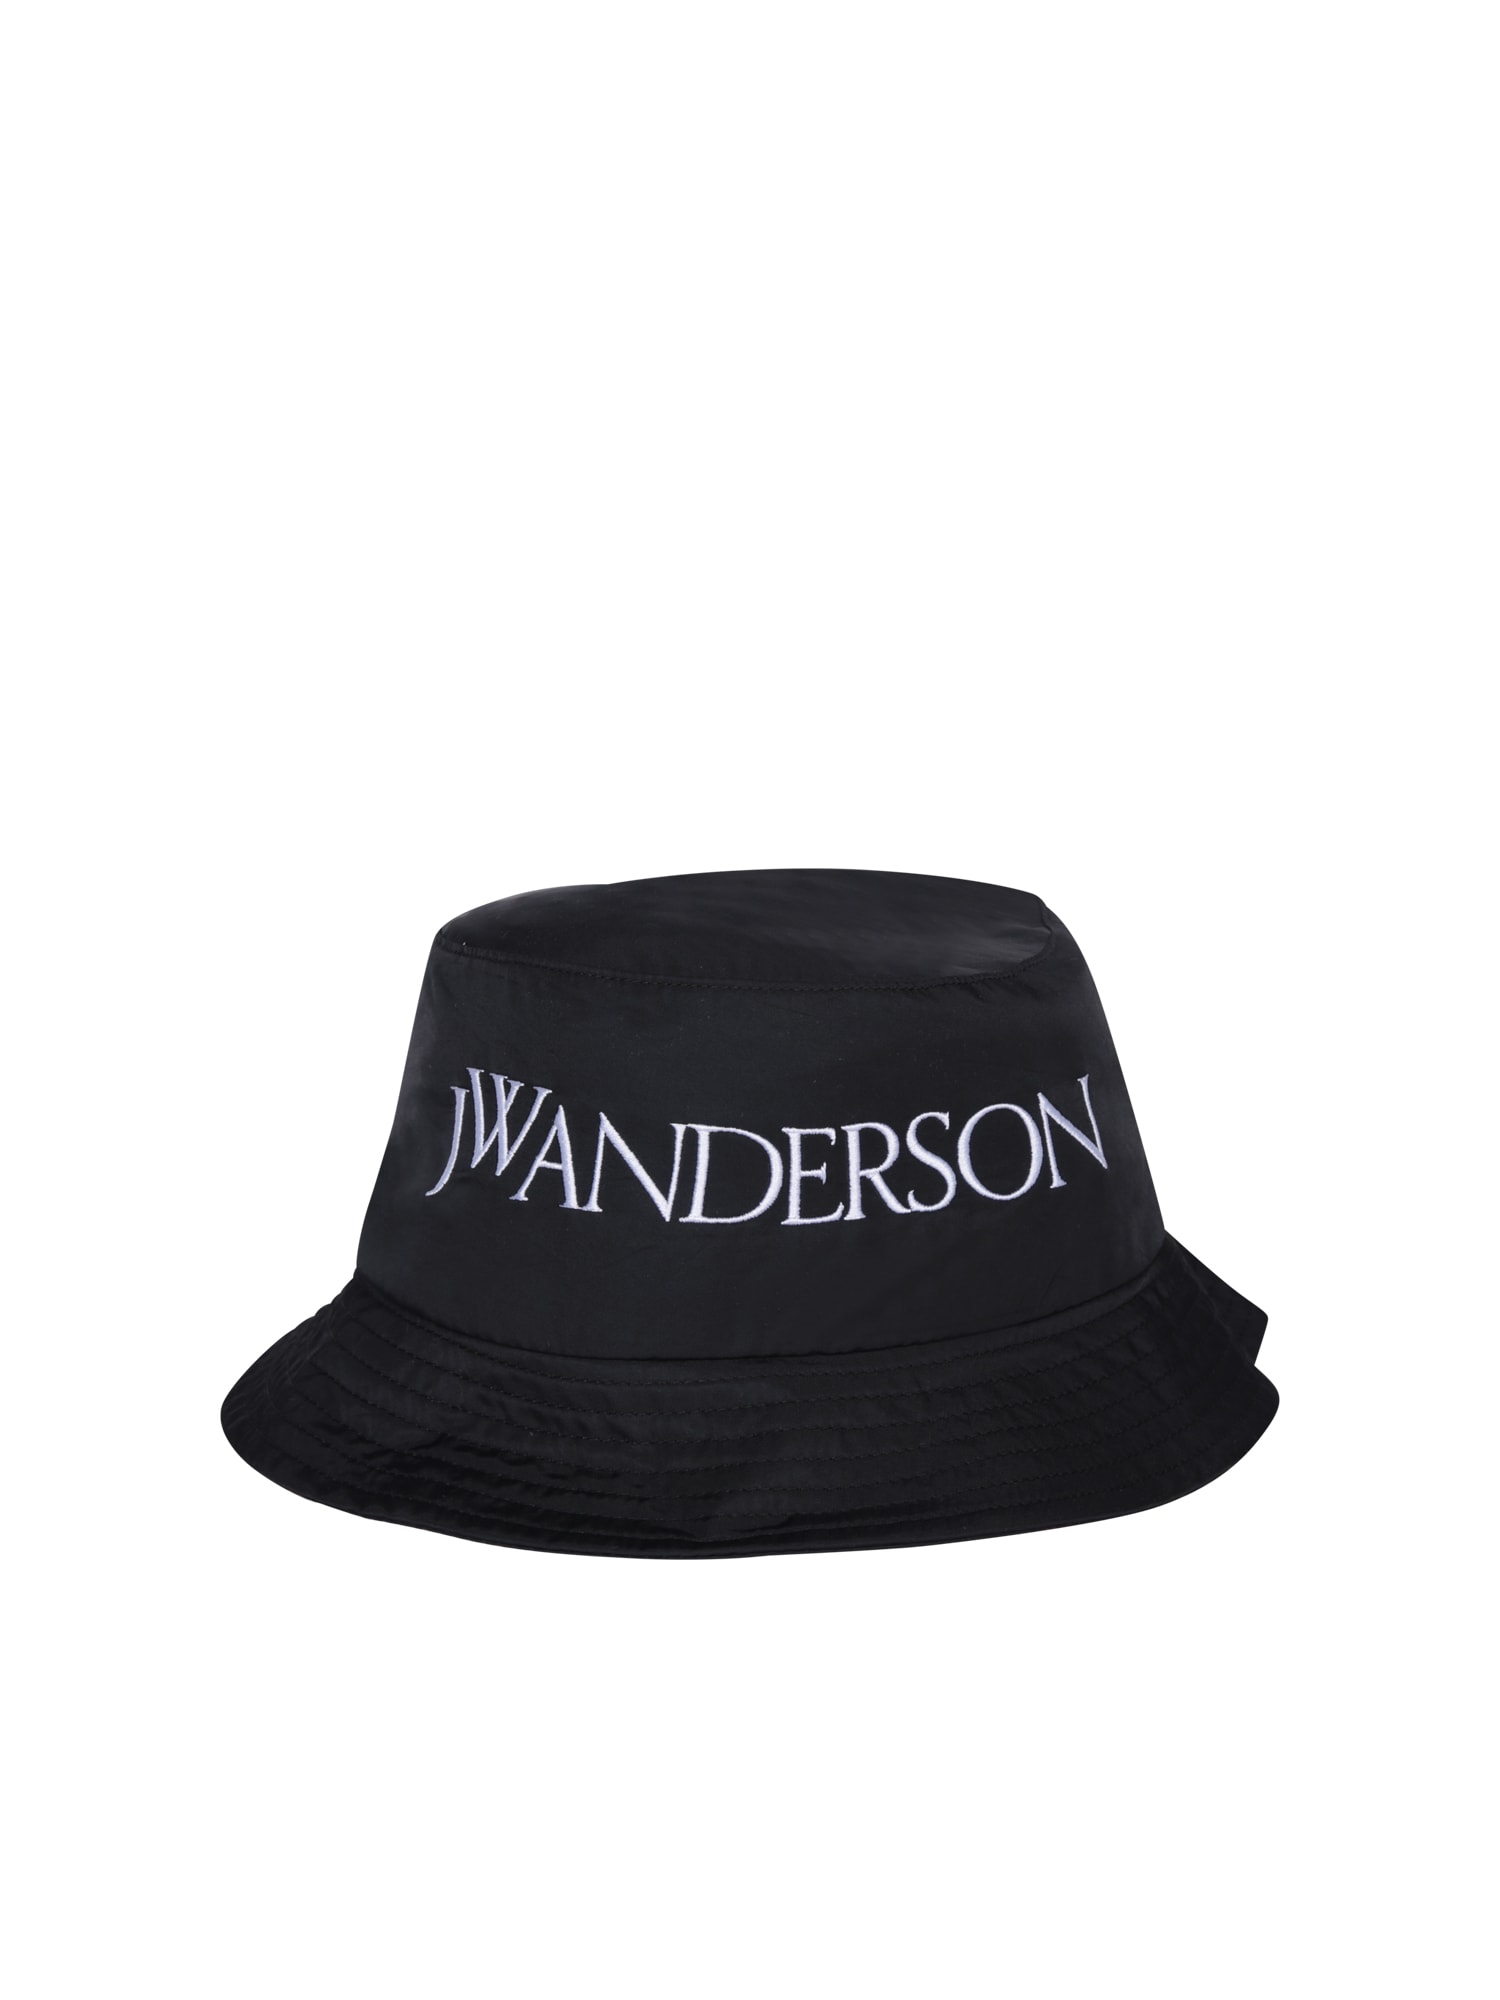 Jw Anderson Black Bucket Hat